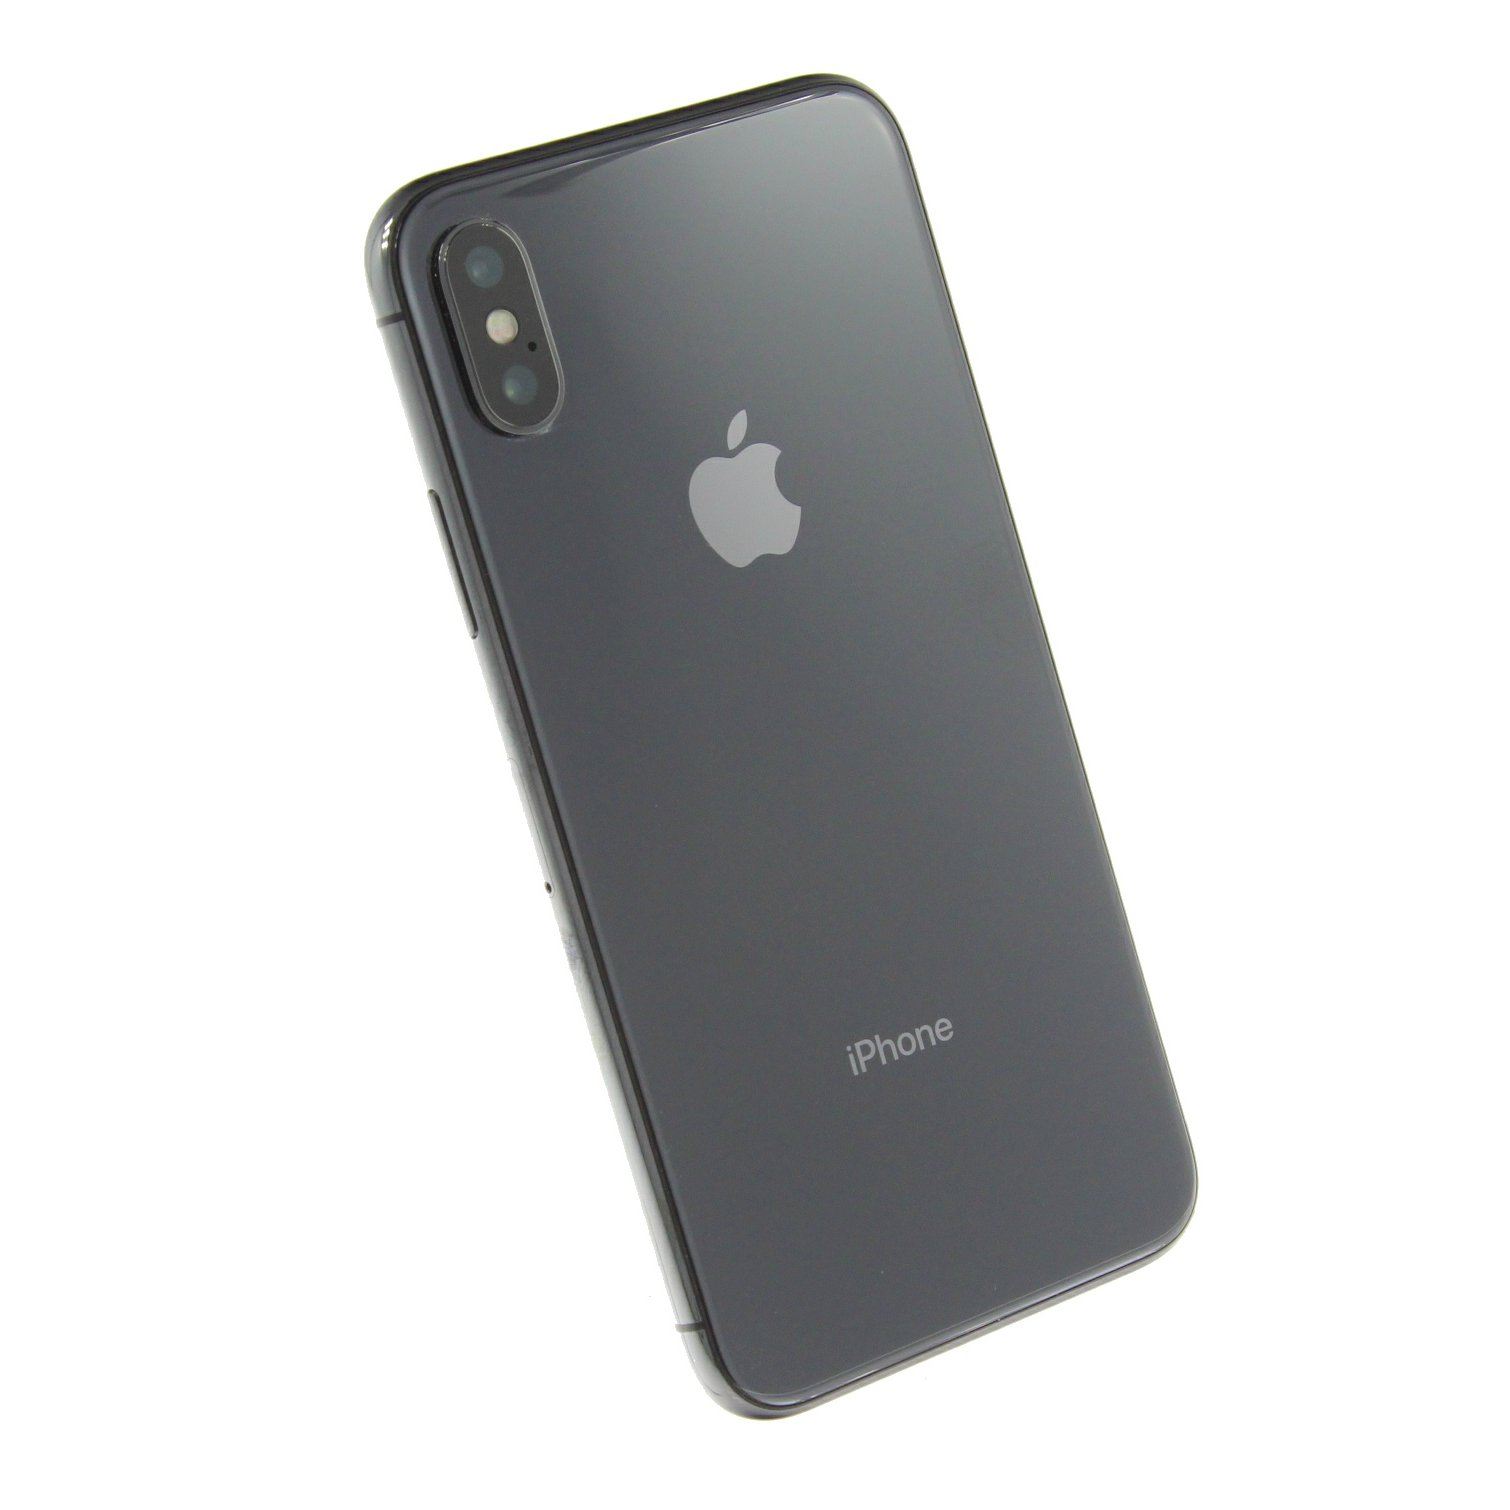 Apple Iphone X, 256GB, Space Gray - Fully Unlocked (Renewed)